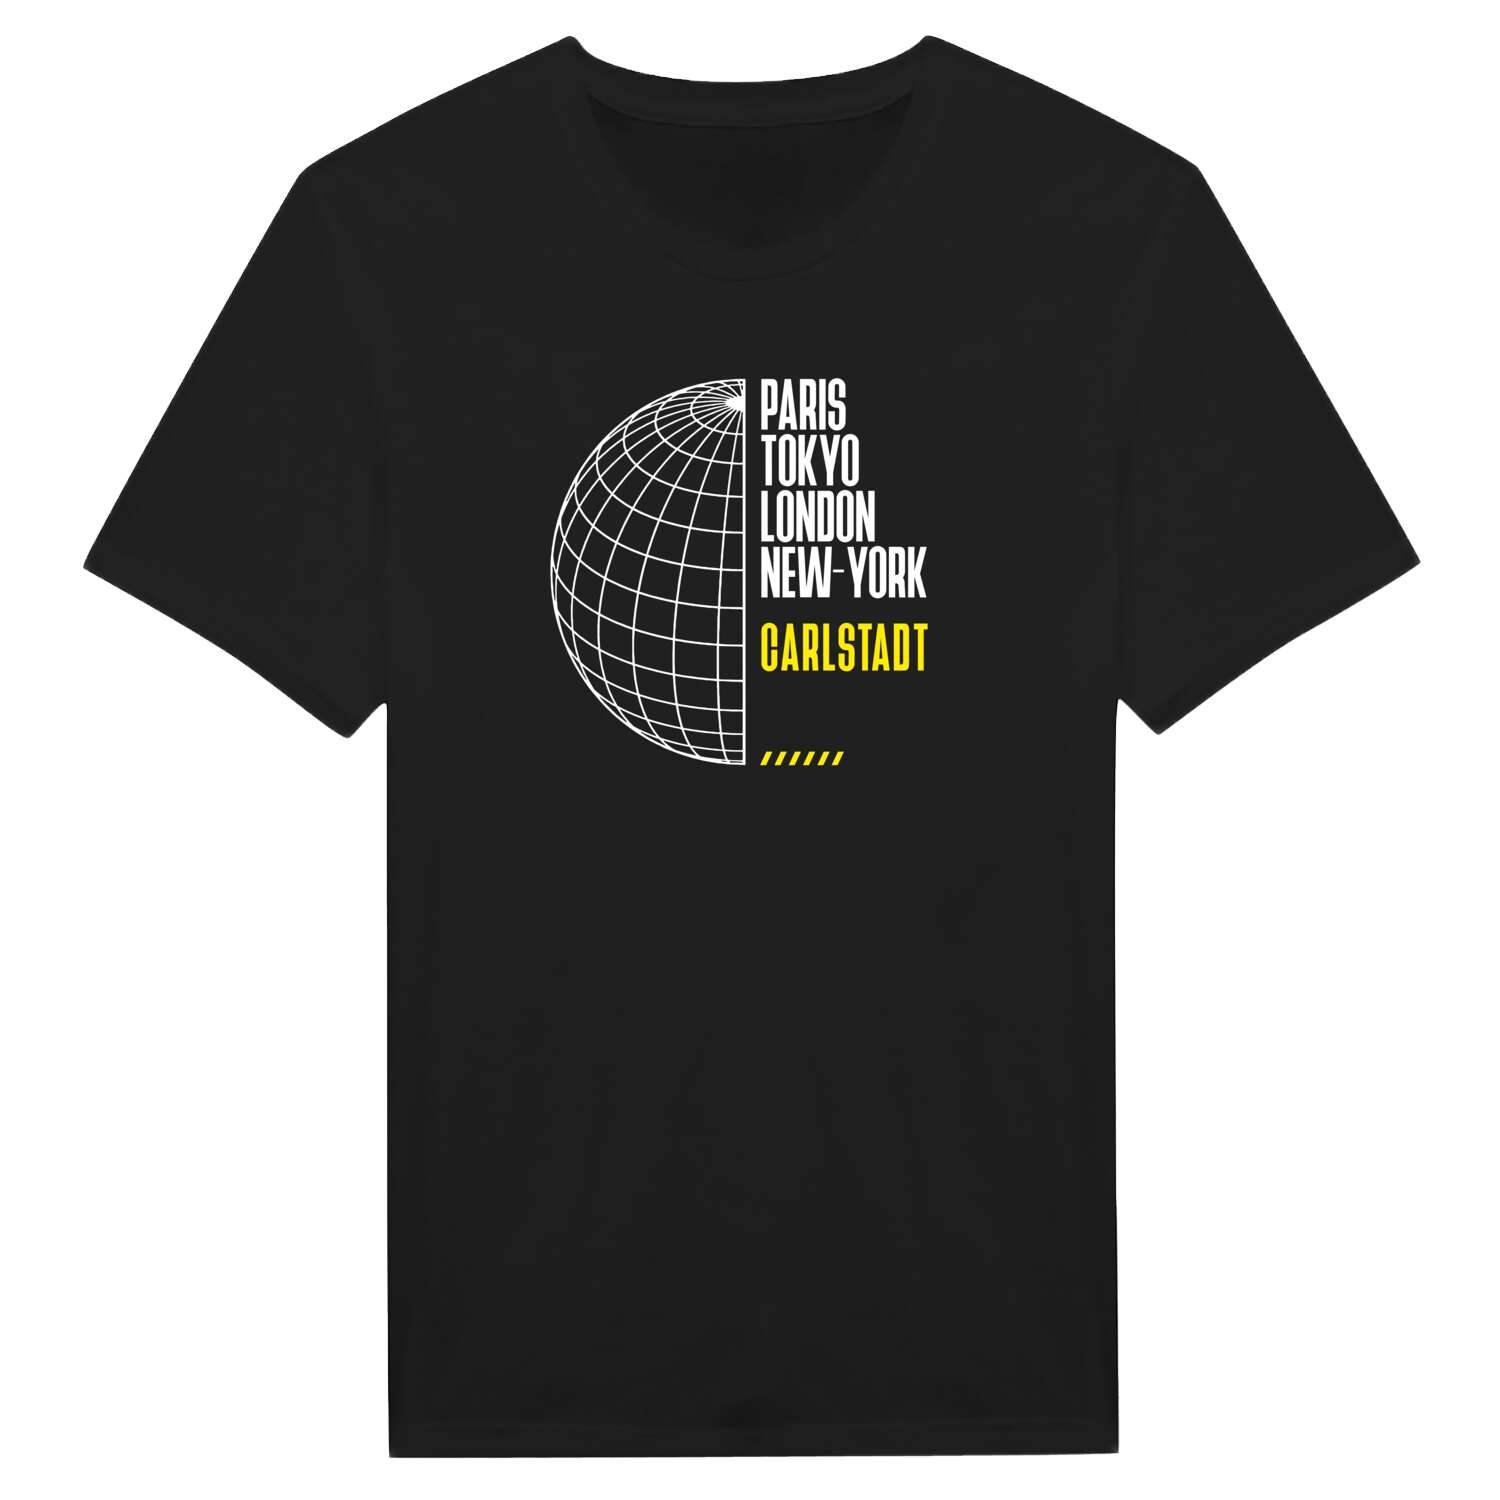 Carlstadt T-Shirt »Paris Tokyo London«